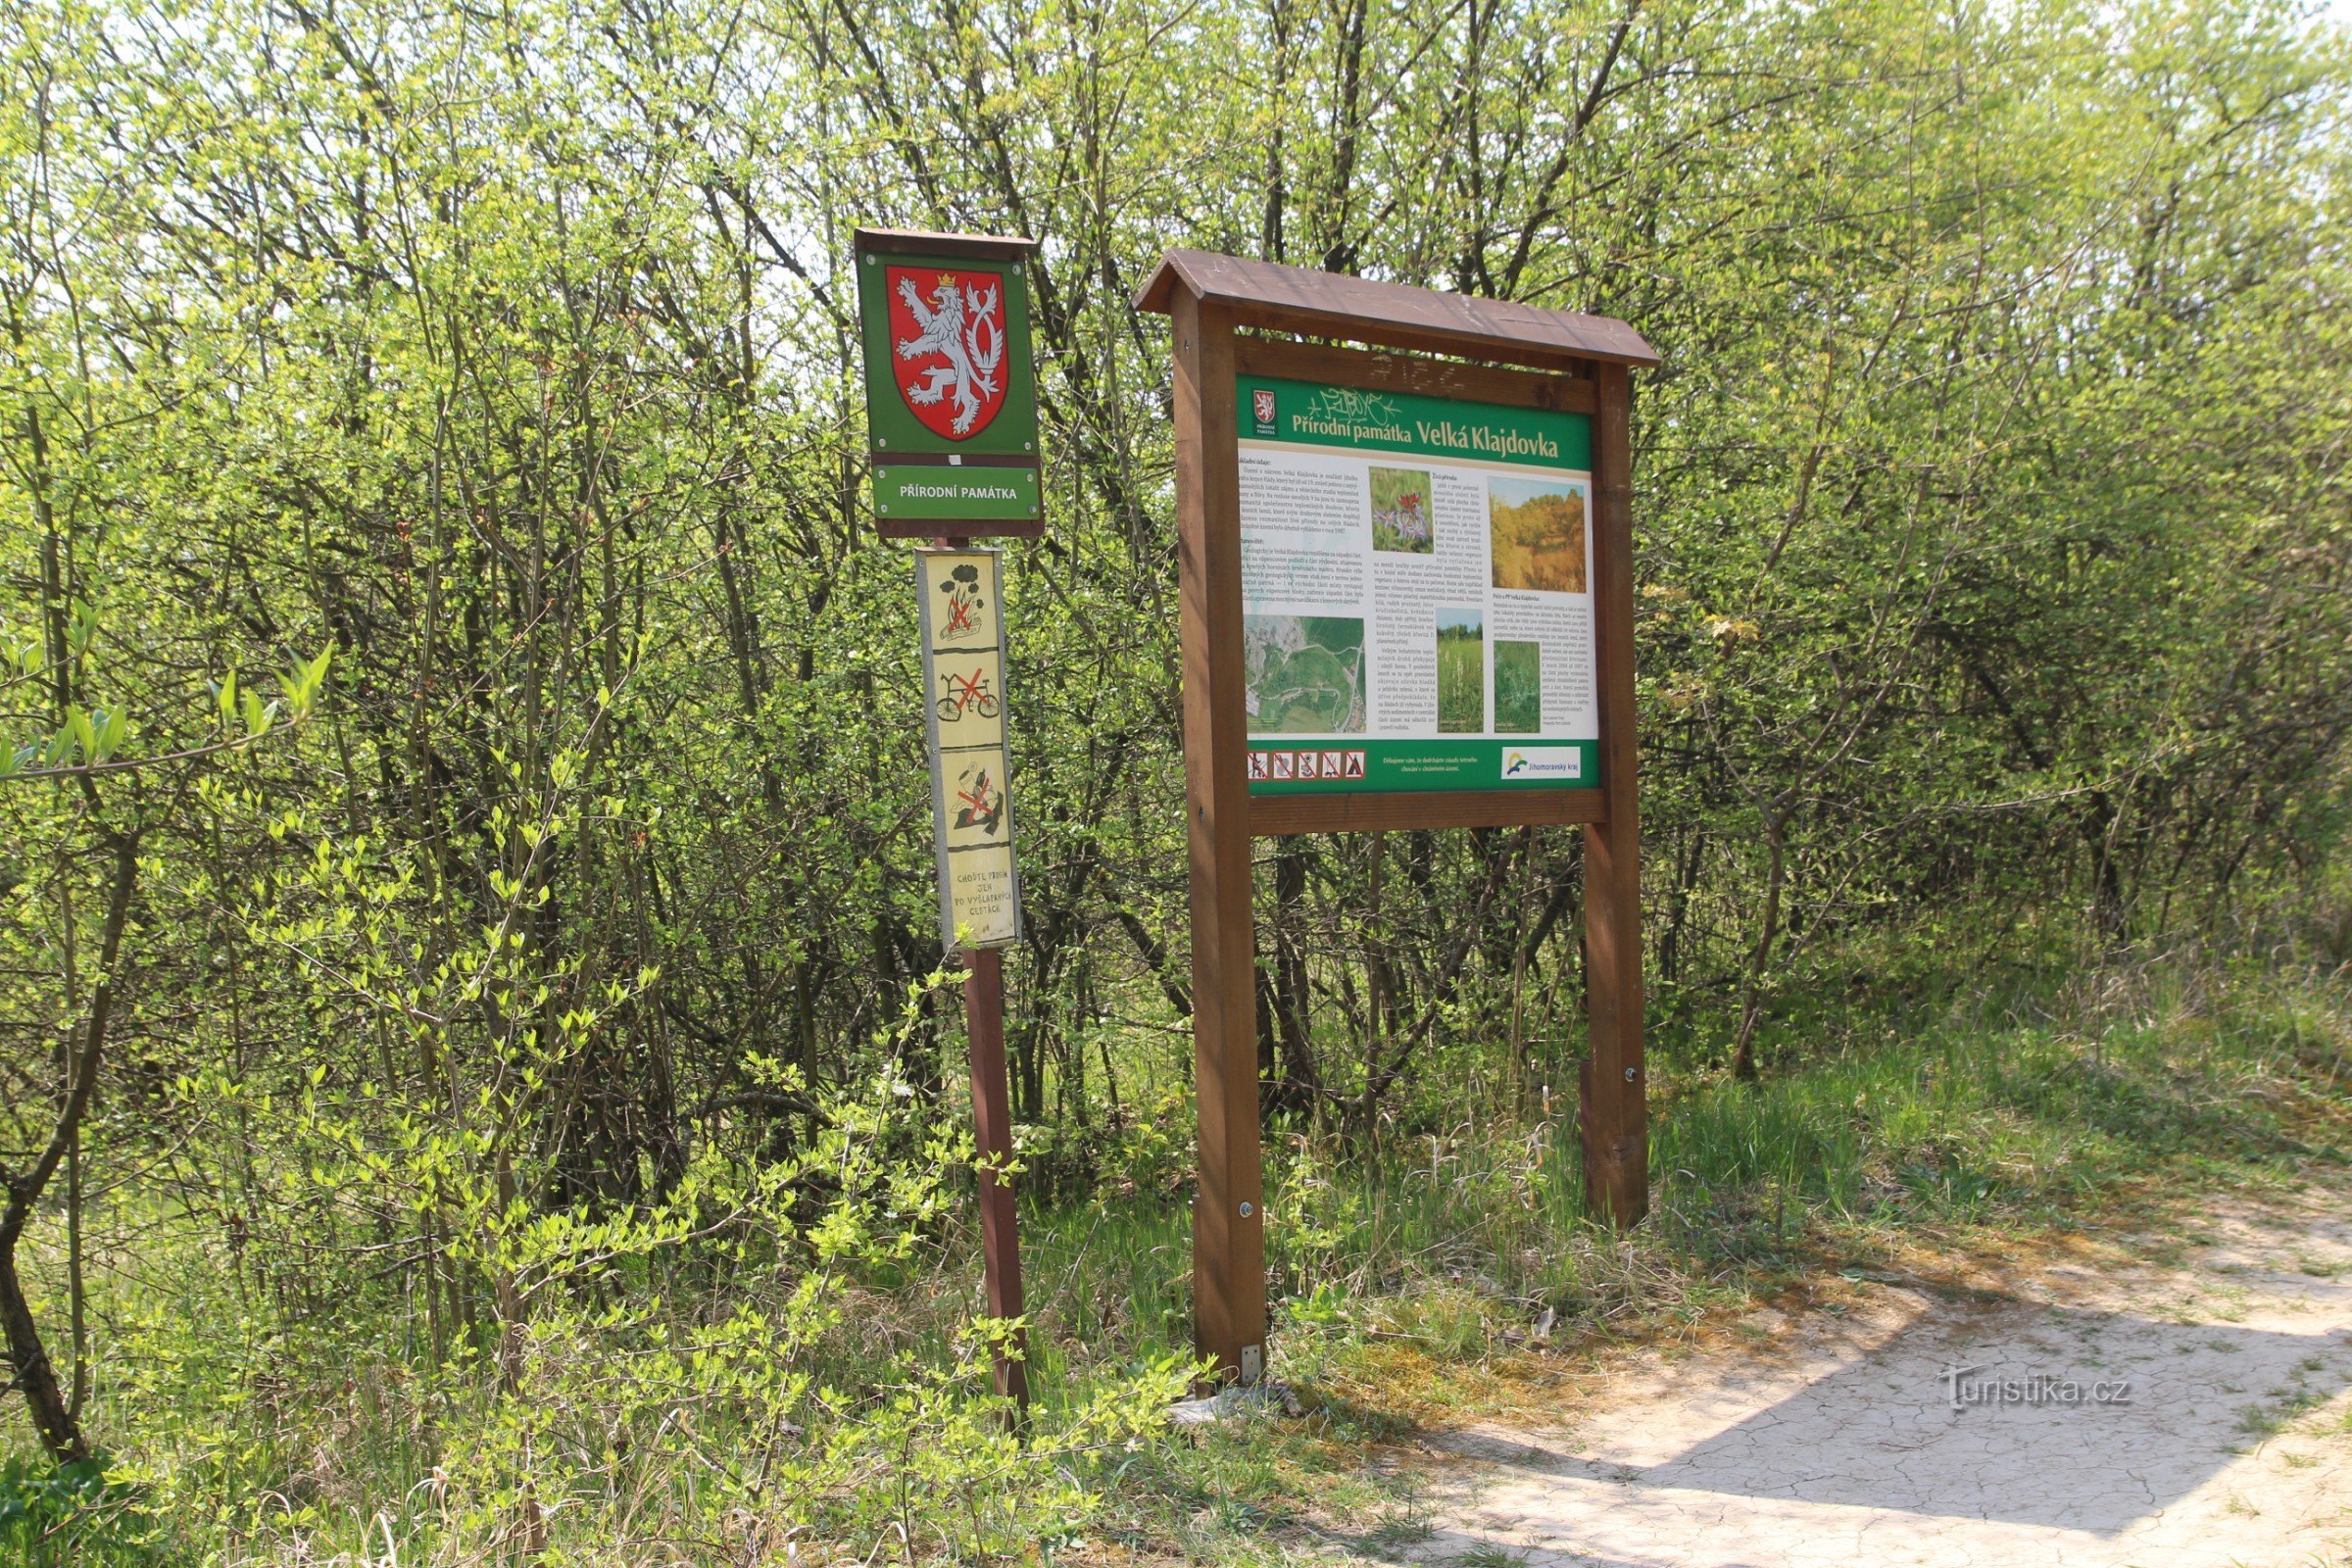 At the beginning of the route near Velká Klajdovka